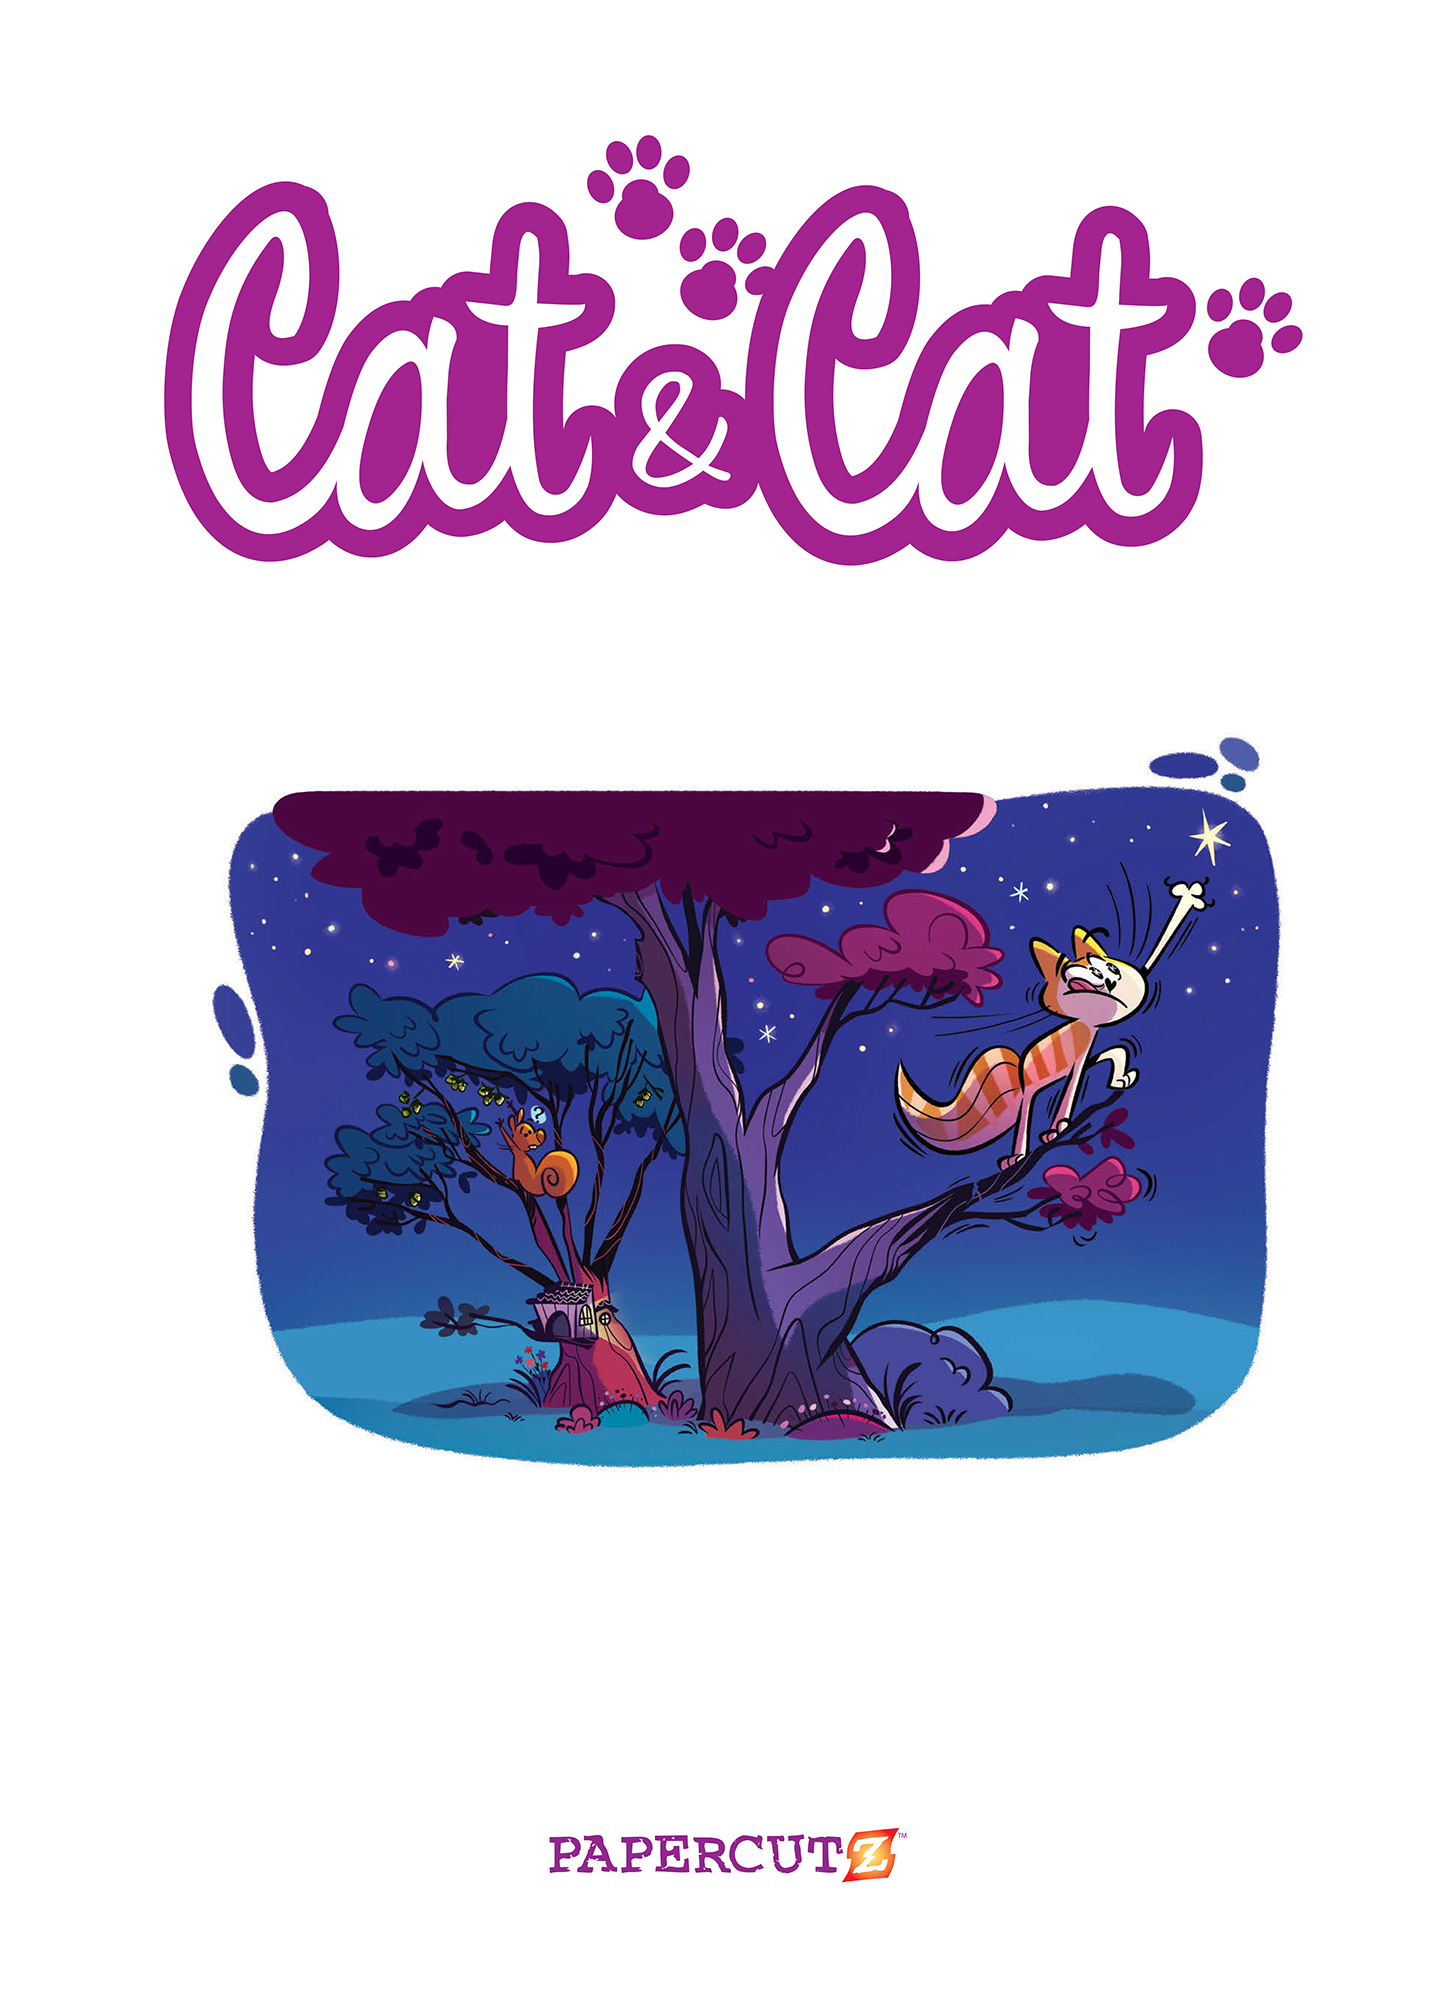 Read online Cat & Cat comic -  Issue # TPB 4 - 3